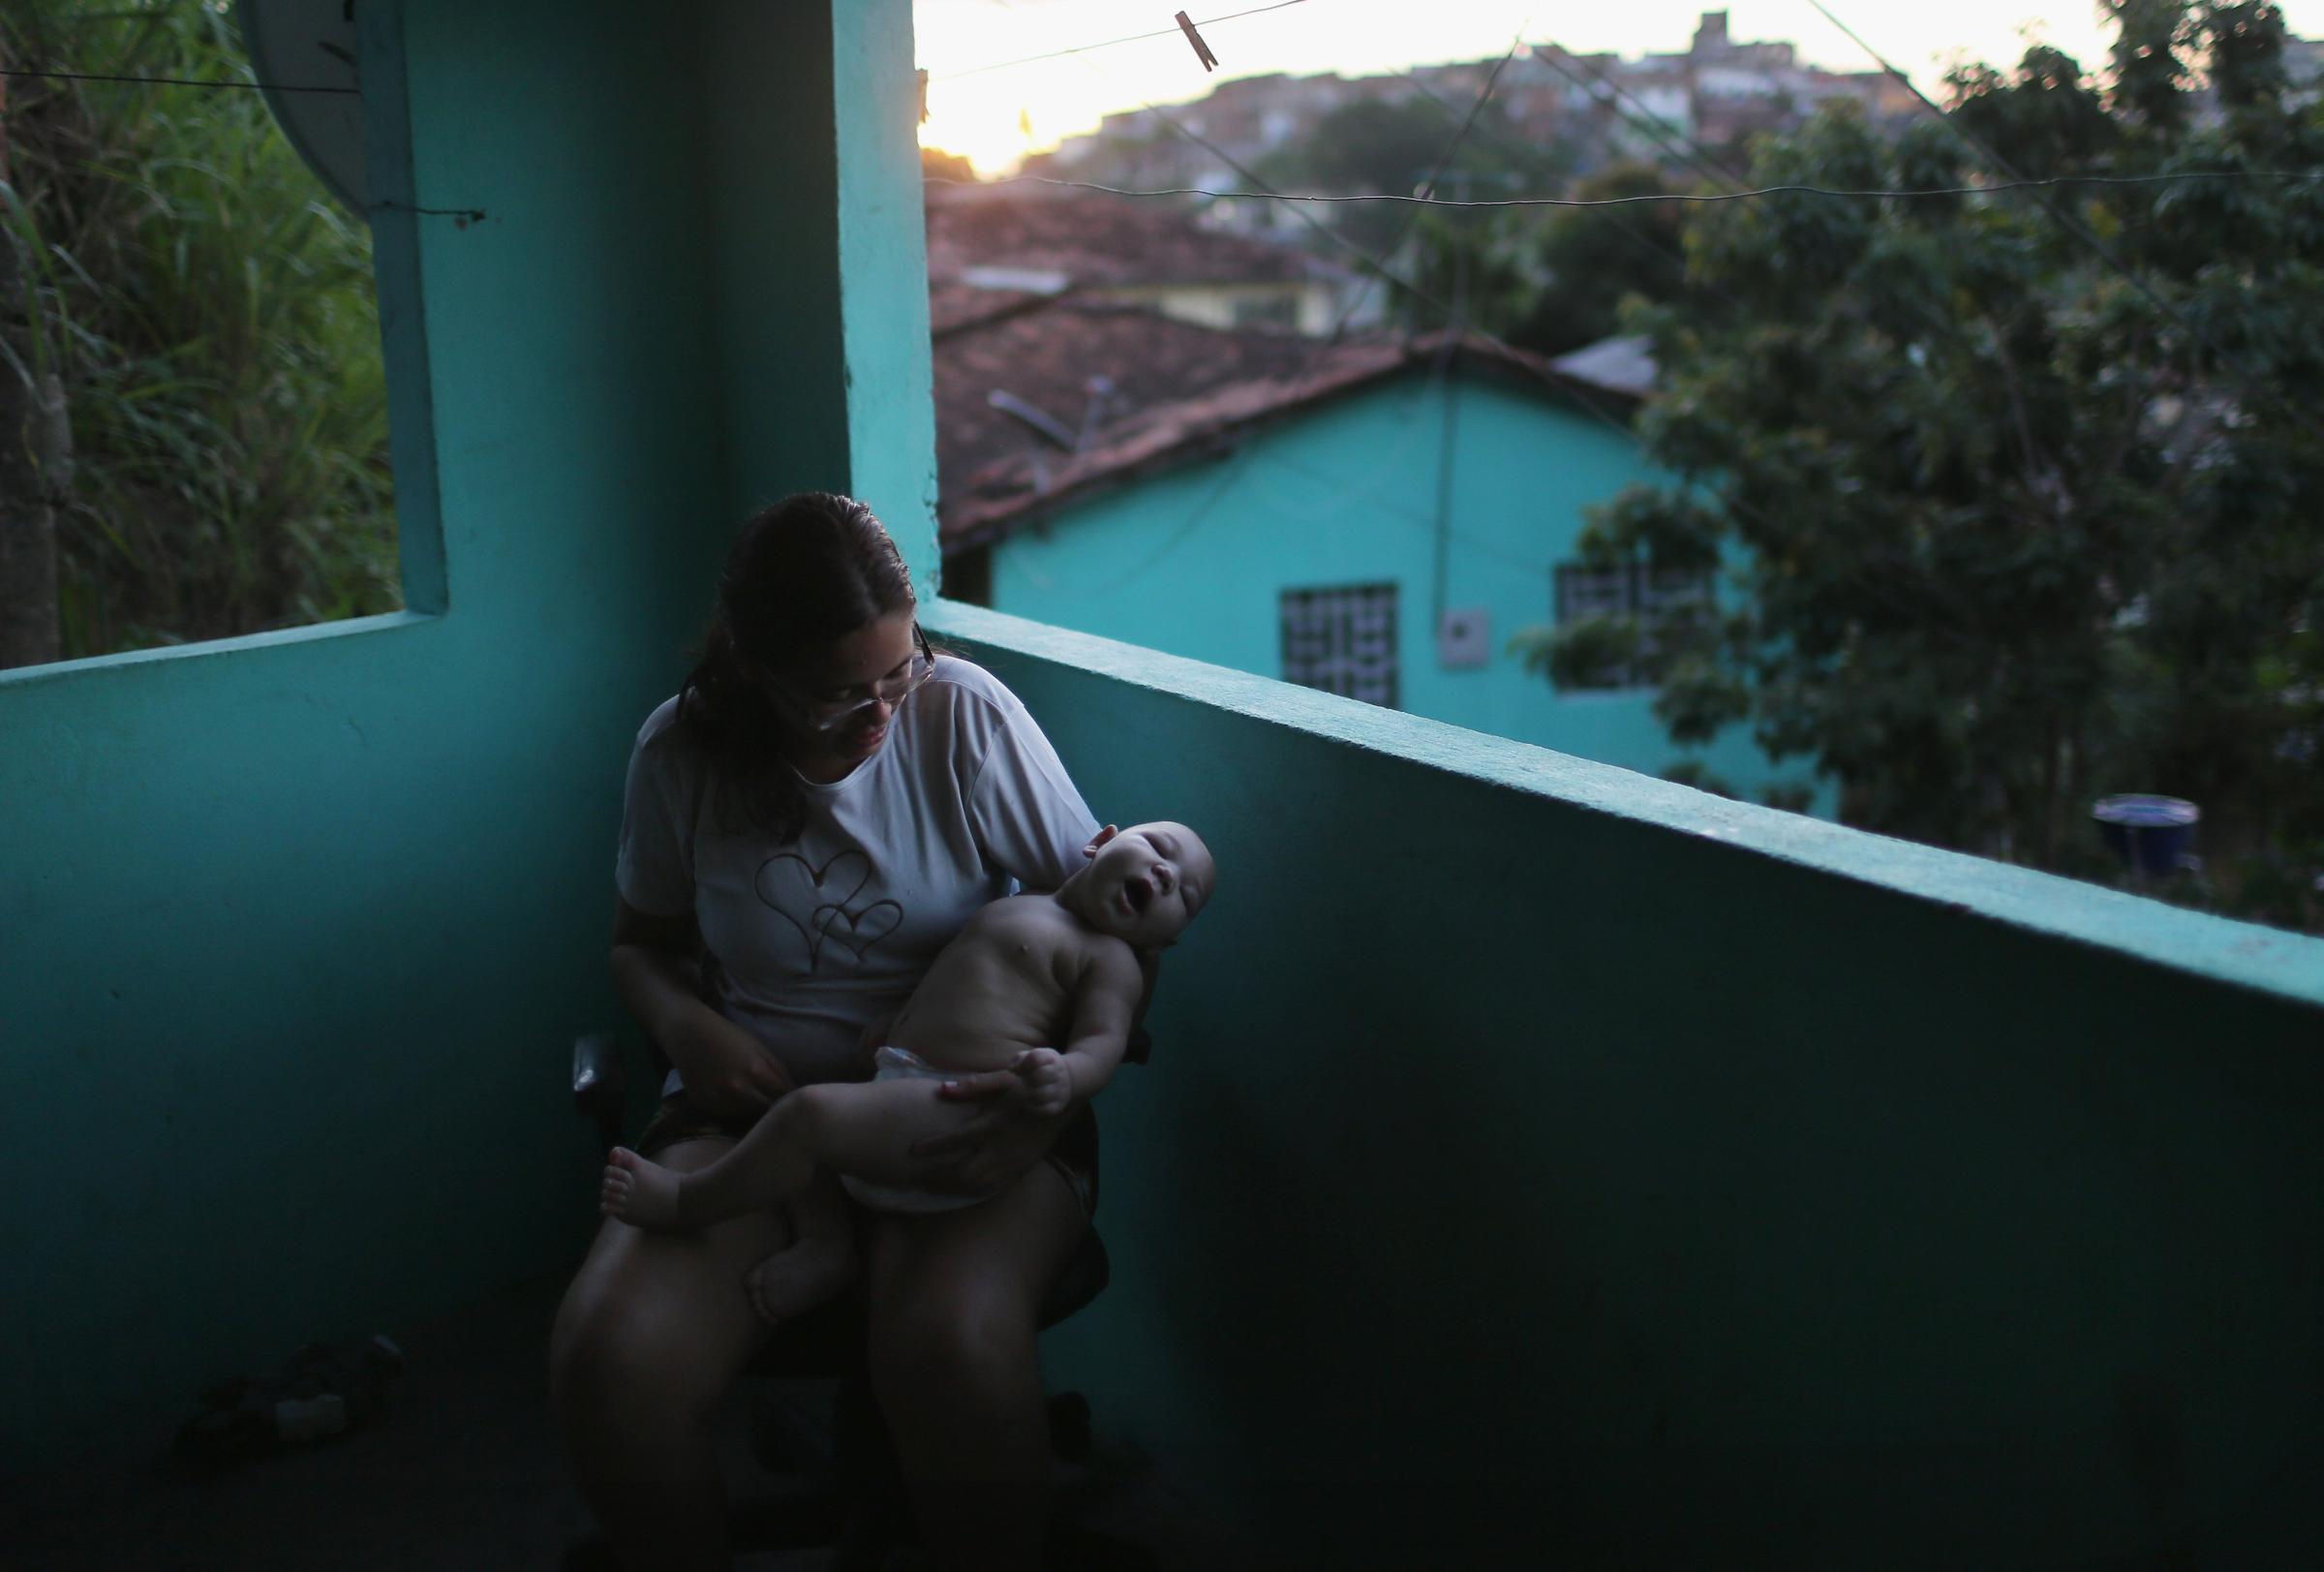 Mylene Helena Ferreira holds her son David Henrique Ferreira, who has microcephaly, on Jan. 25, 2016 in Recife, Brazil.